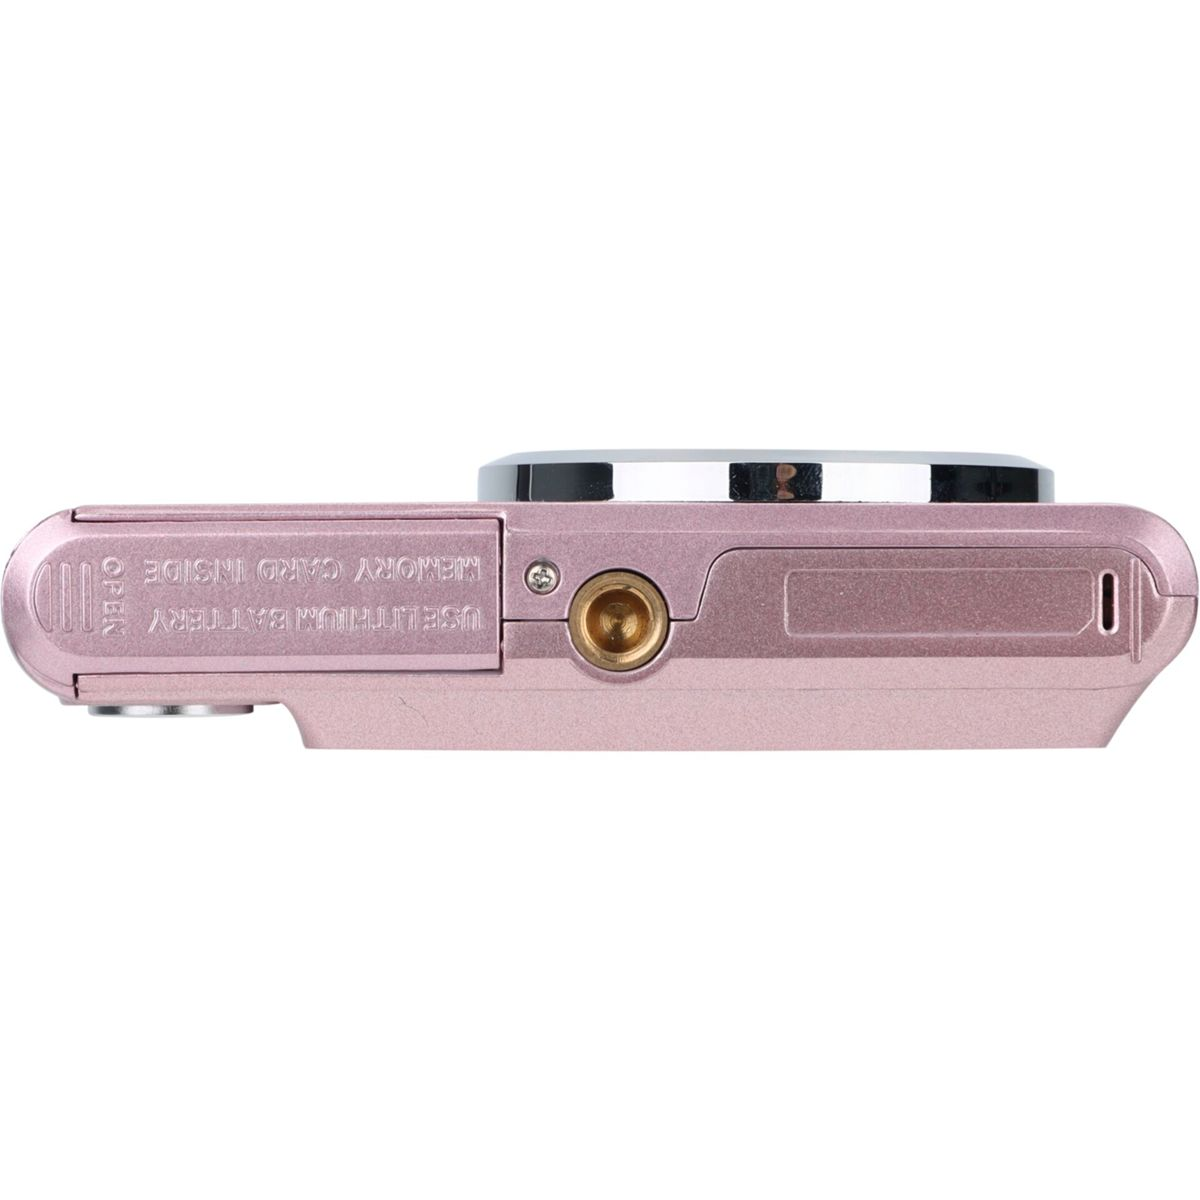 pink pink AGFAPHOTO DC5200 Cam Digitalkamera Compact